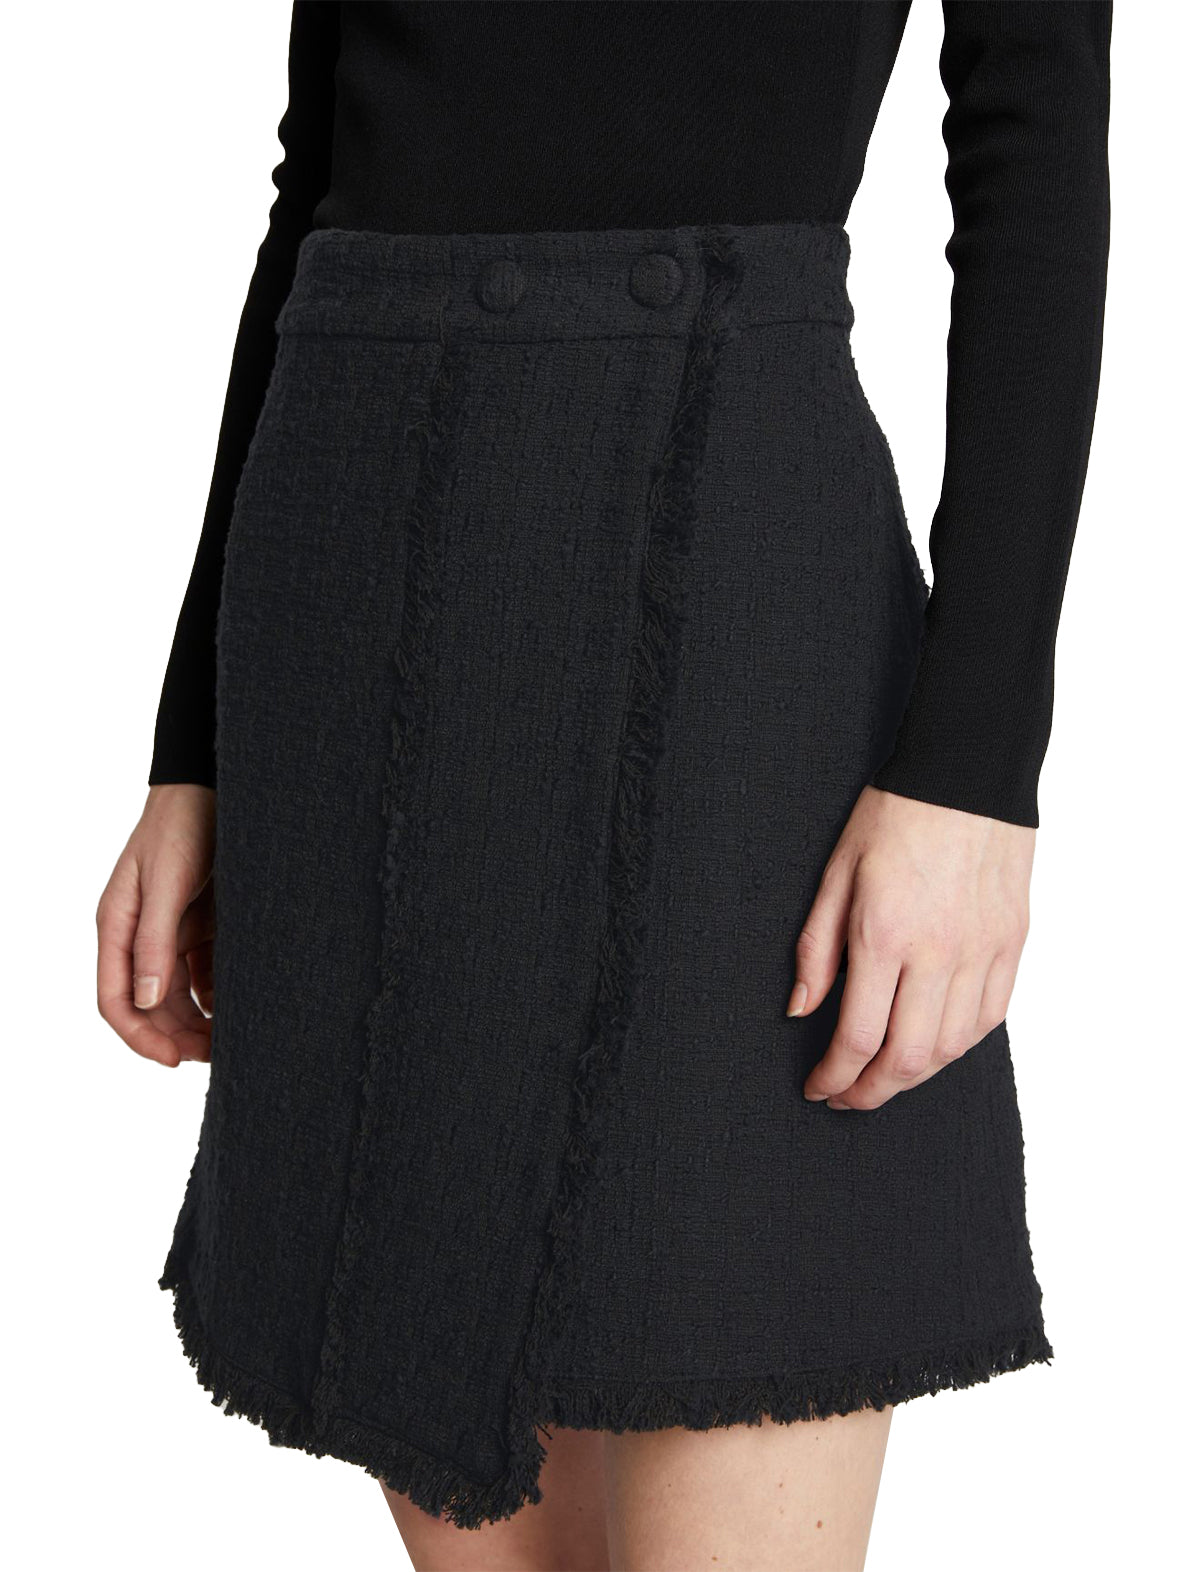 PROENZA SCHOULER WHITE LABEL Tweed Mini Skirt in Black